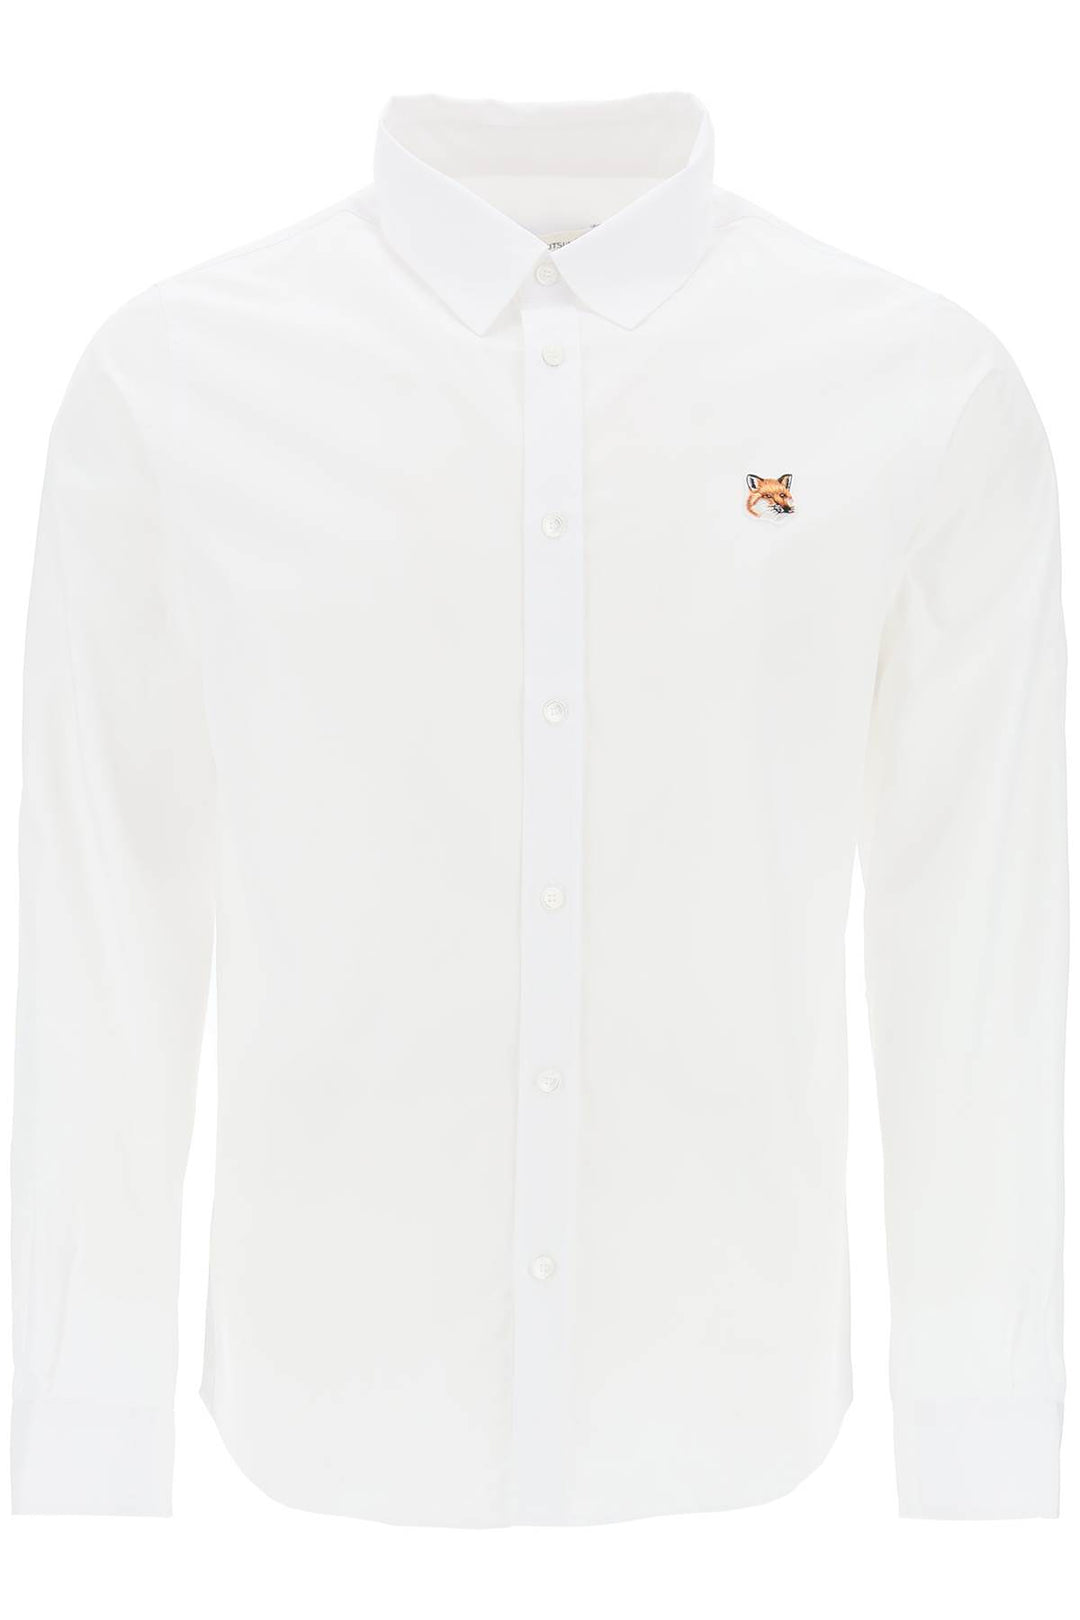 Maison Kitsune Fox Head Poplin Shirt   Bianco